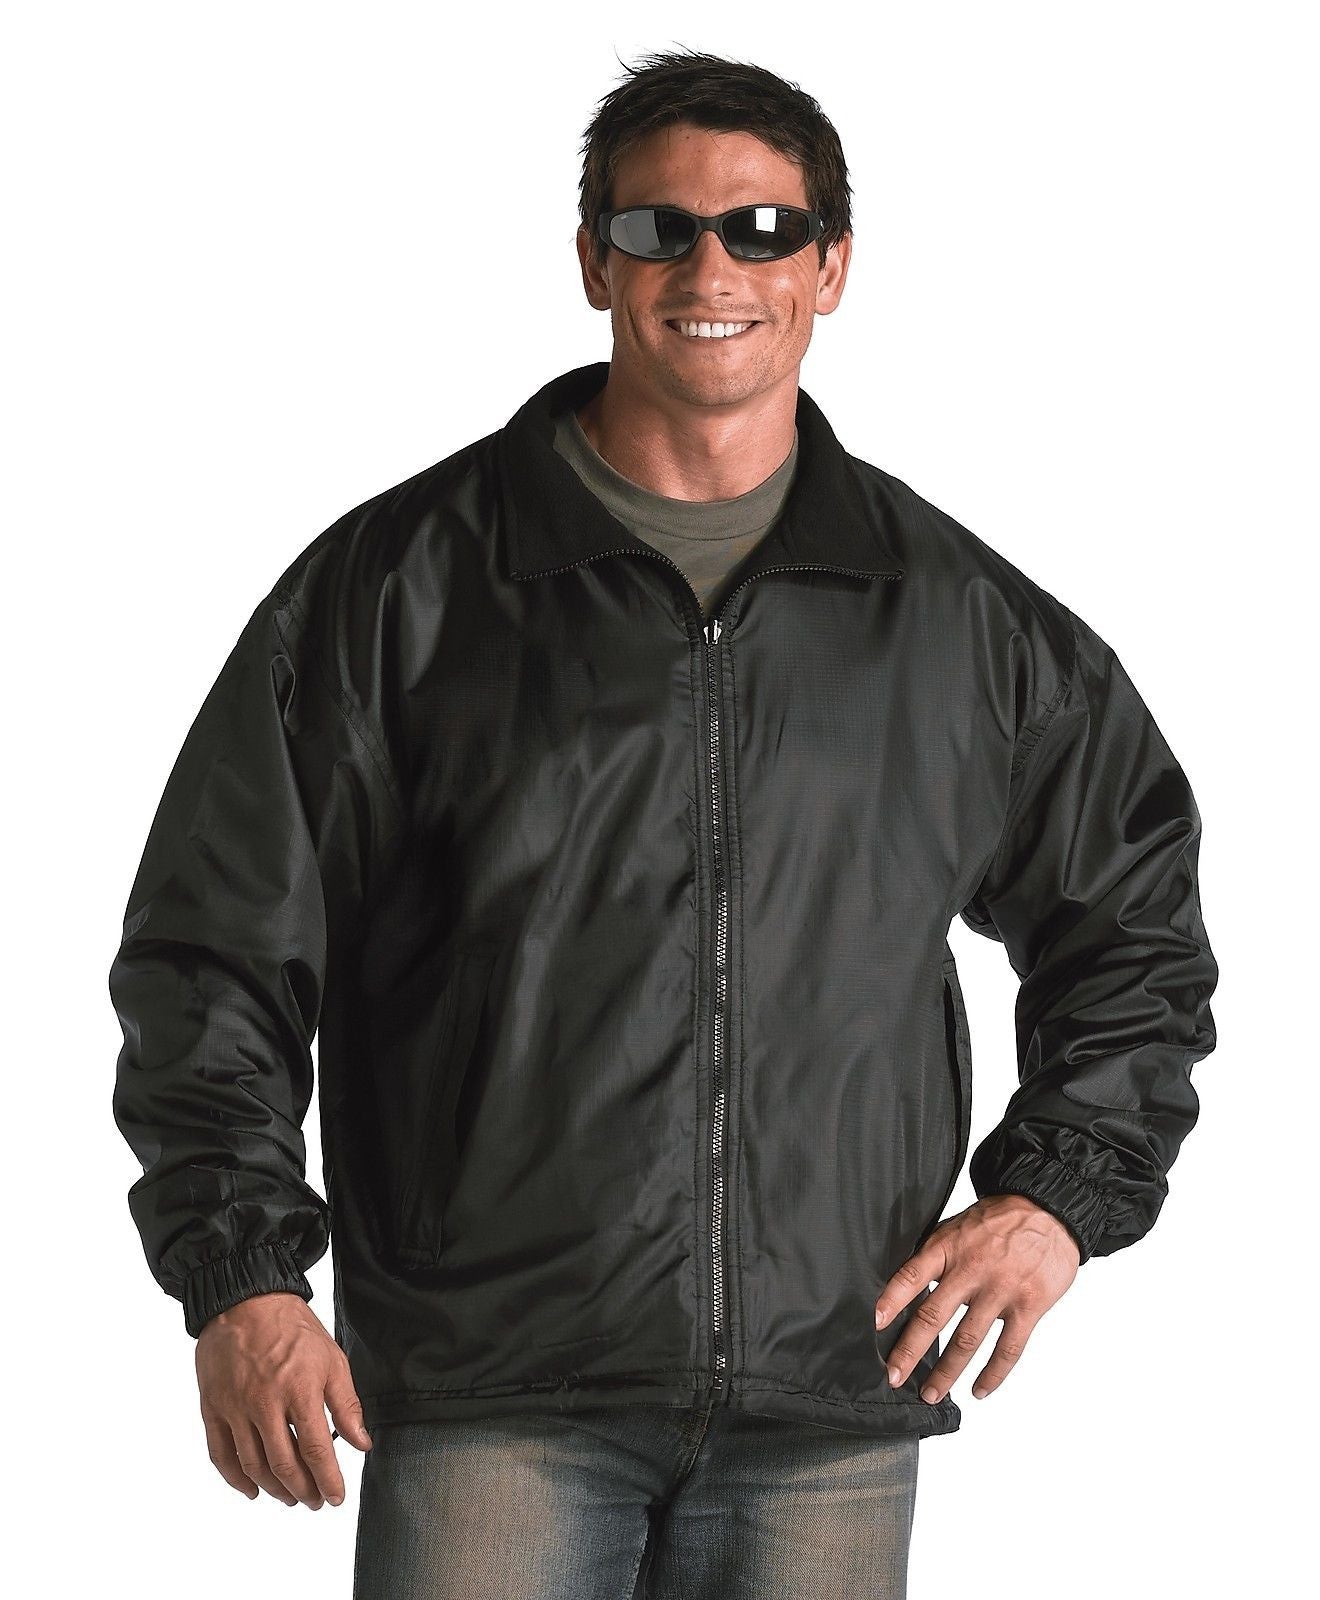 Black Fleece Lined Nylon Jacket Reversible - Waterproof Outer Shell ...